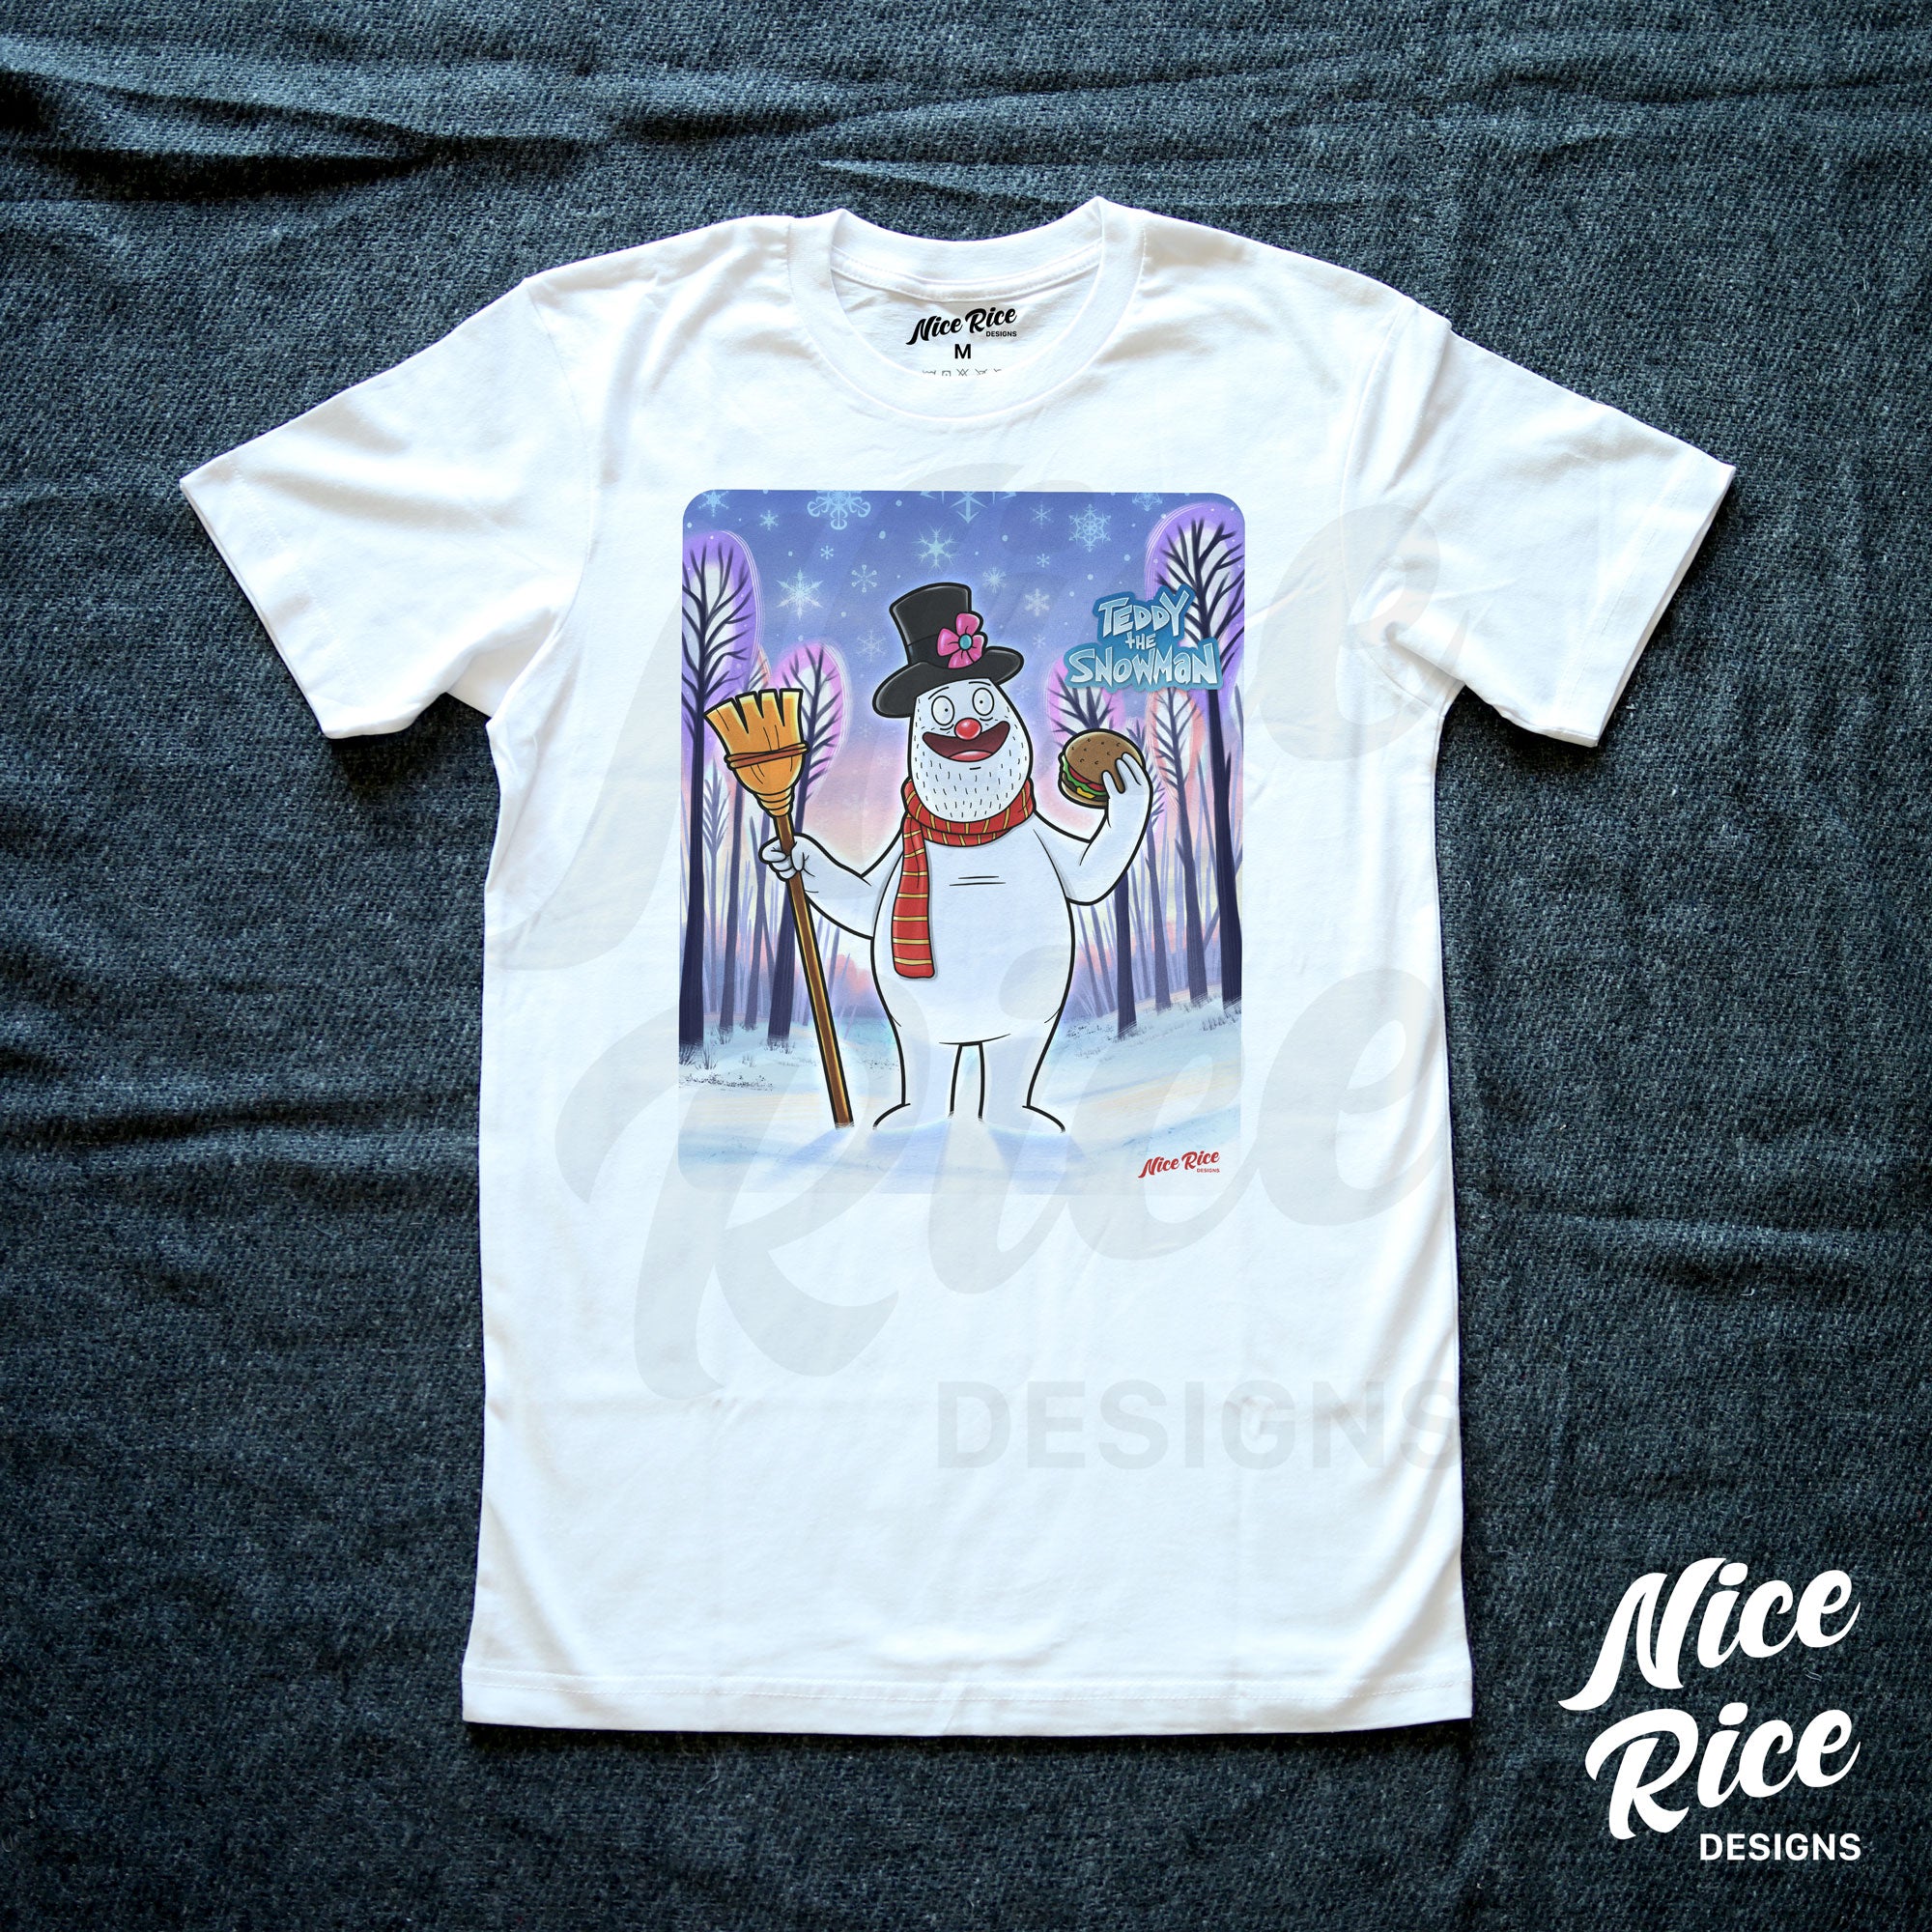 Teddy the Snowman Shirt by Nice Rice Designs